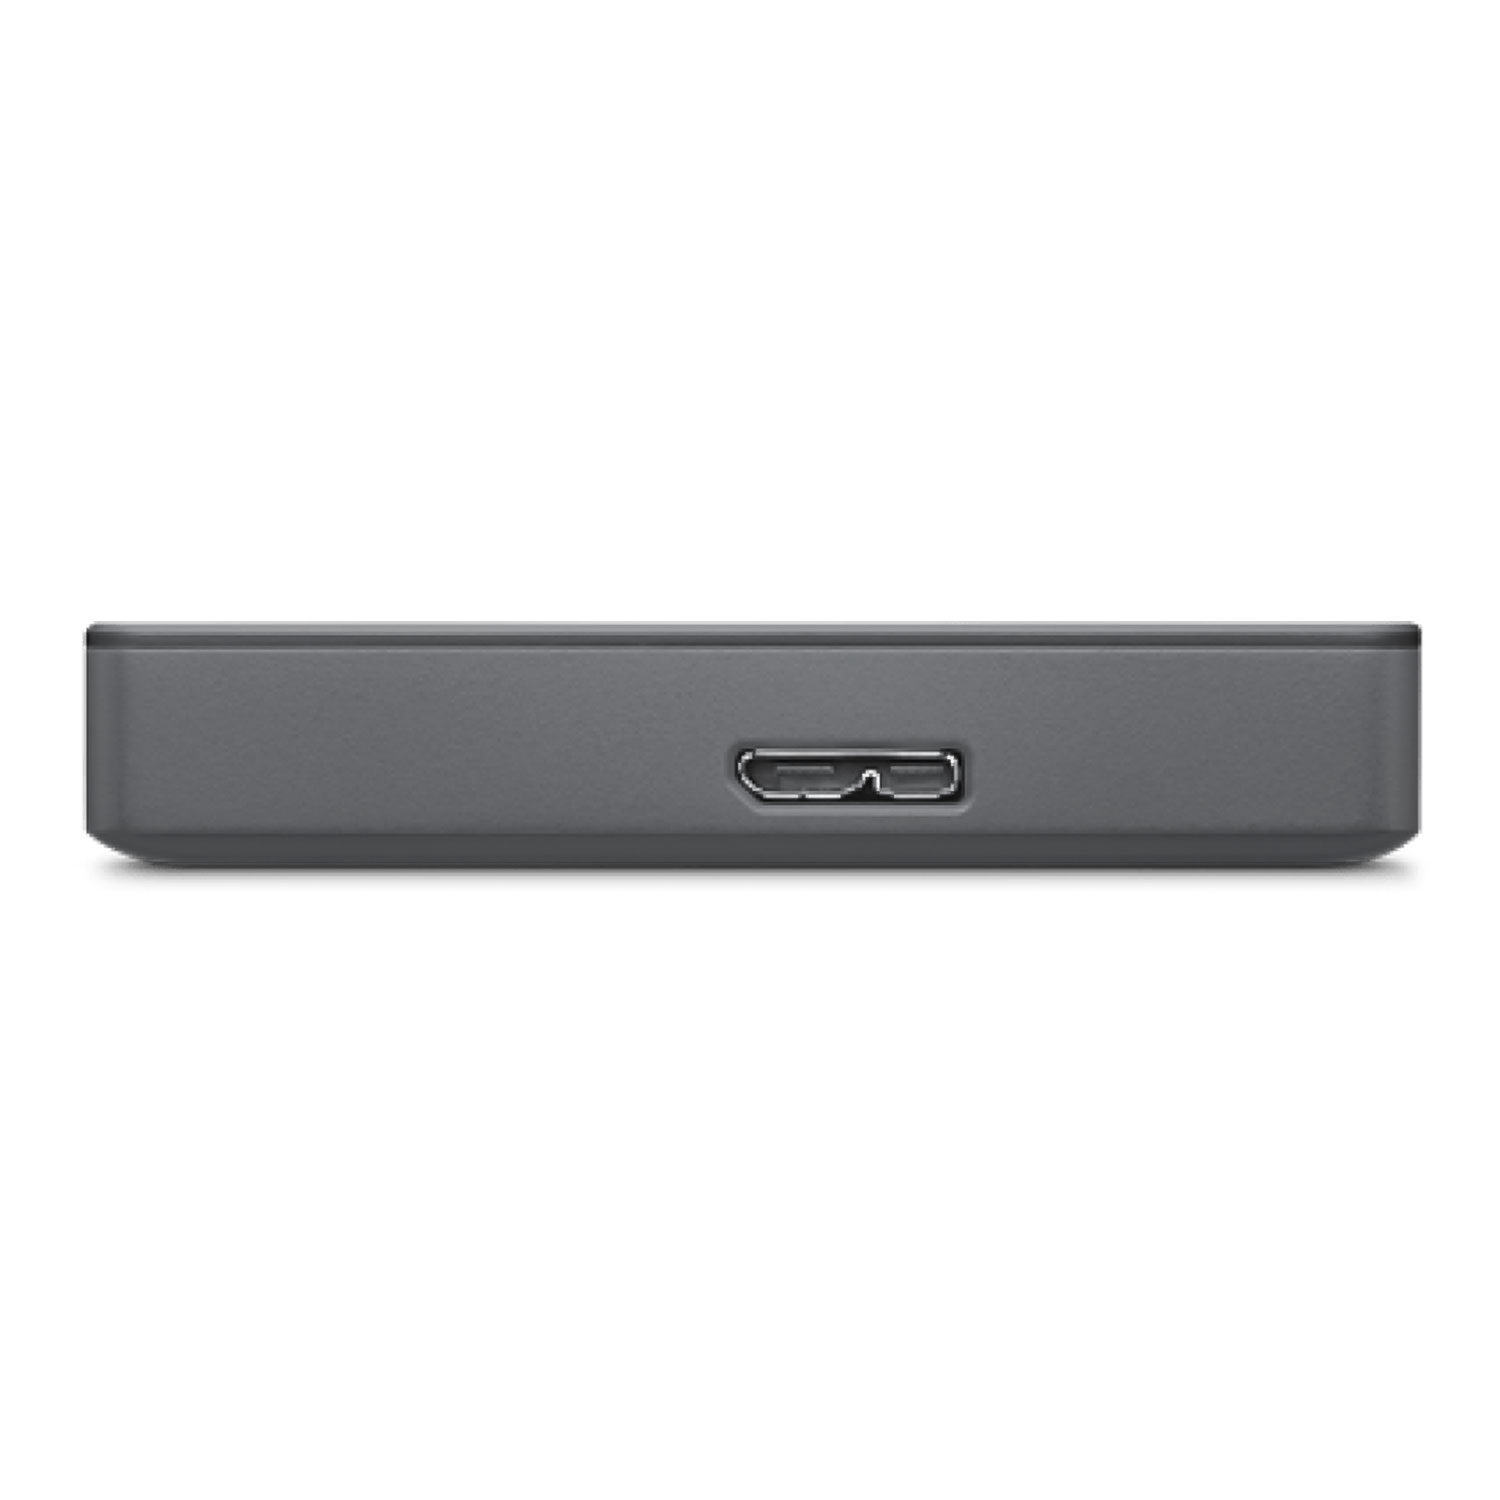 HD Externo Portátil Seagate Expansion 1TB 2.5" USB 3.0 - STGX1000400
